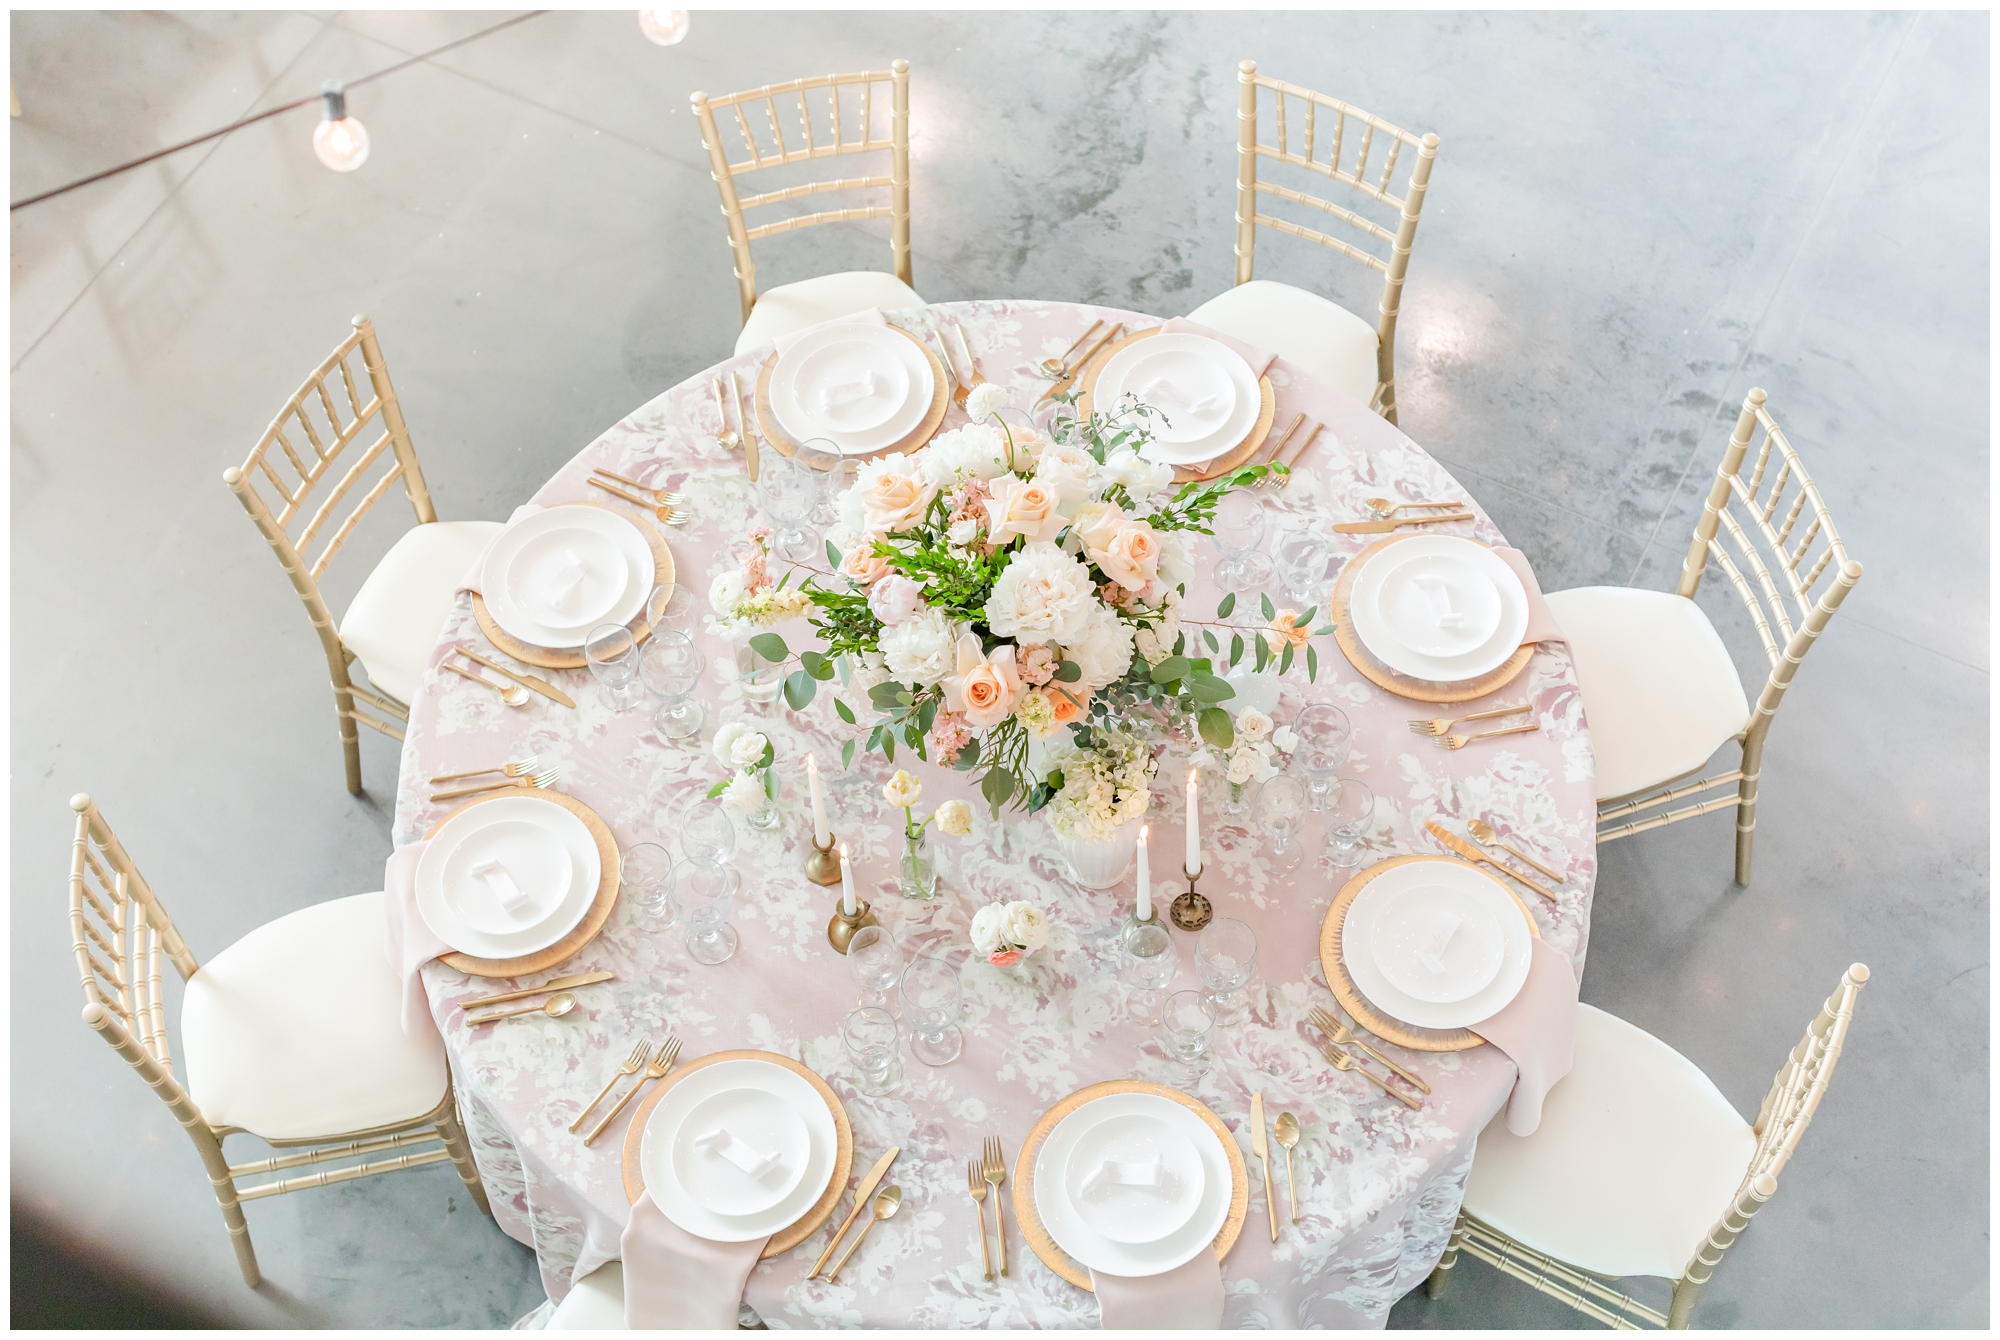 BBJ Linens floral tablecloth at Emerson Fields wedding venue